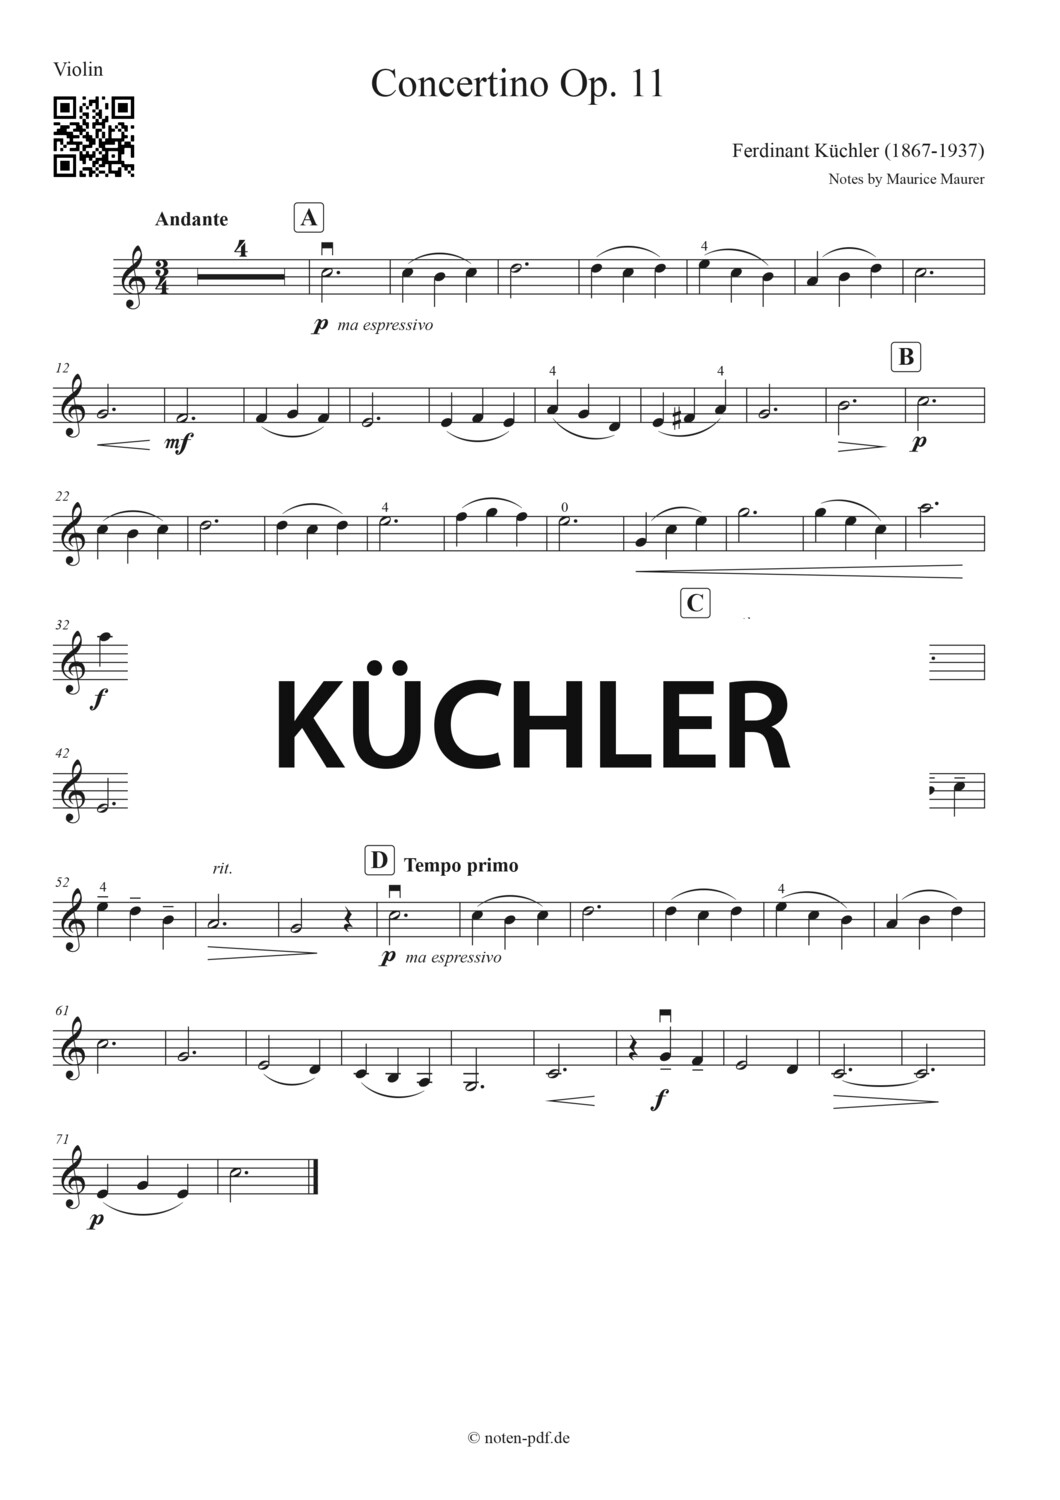 Küchler: Concertino Op. 11 - 2. Movement (Violin Sheet Music)